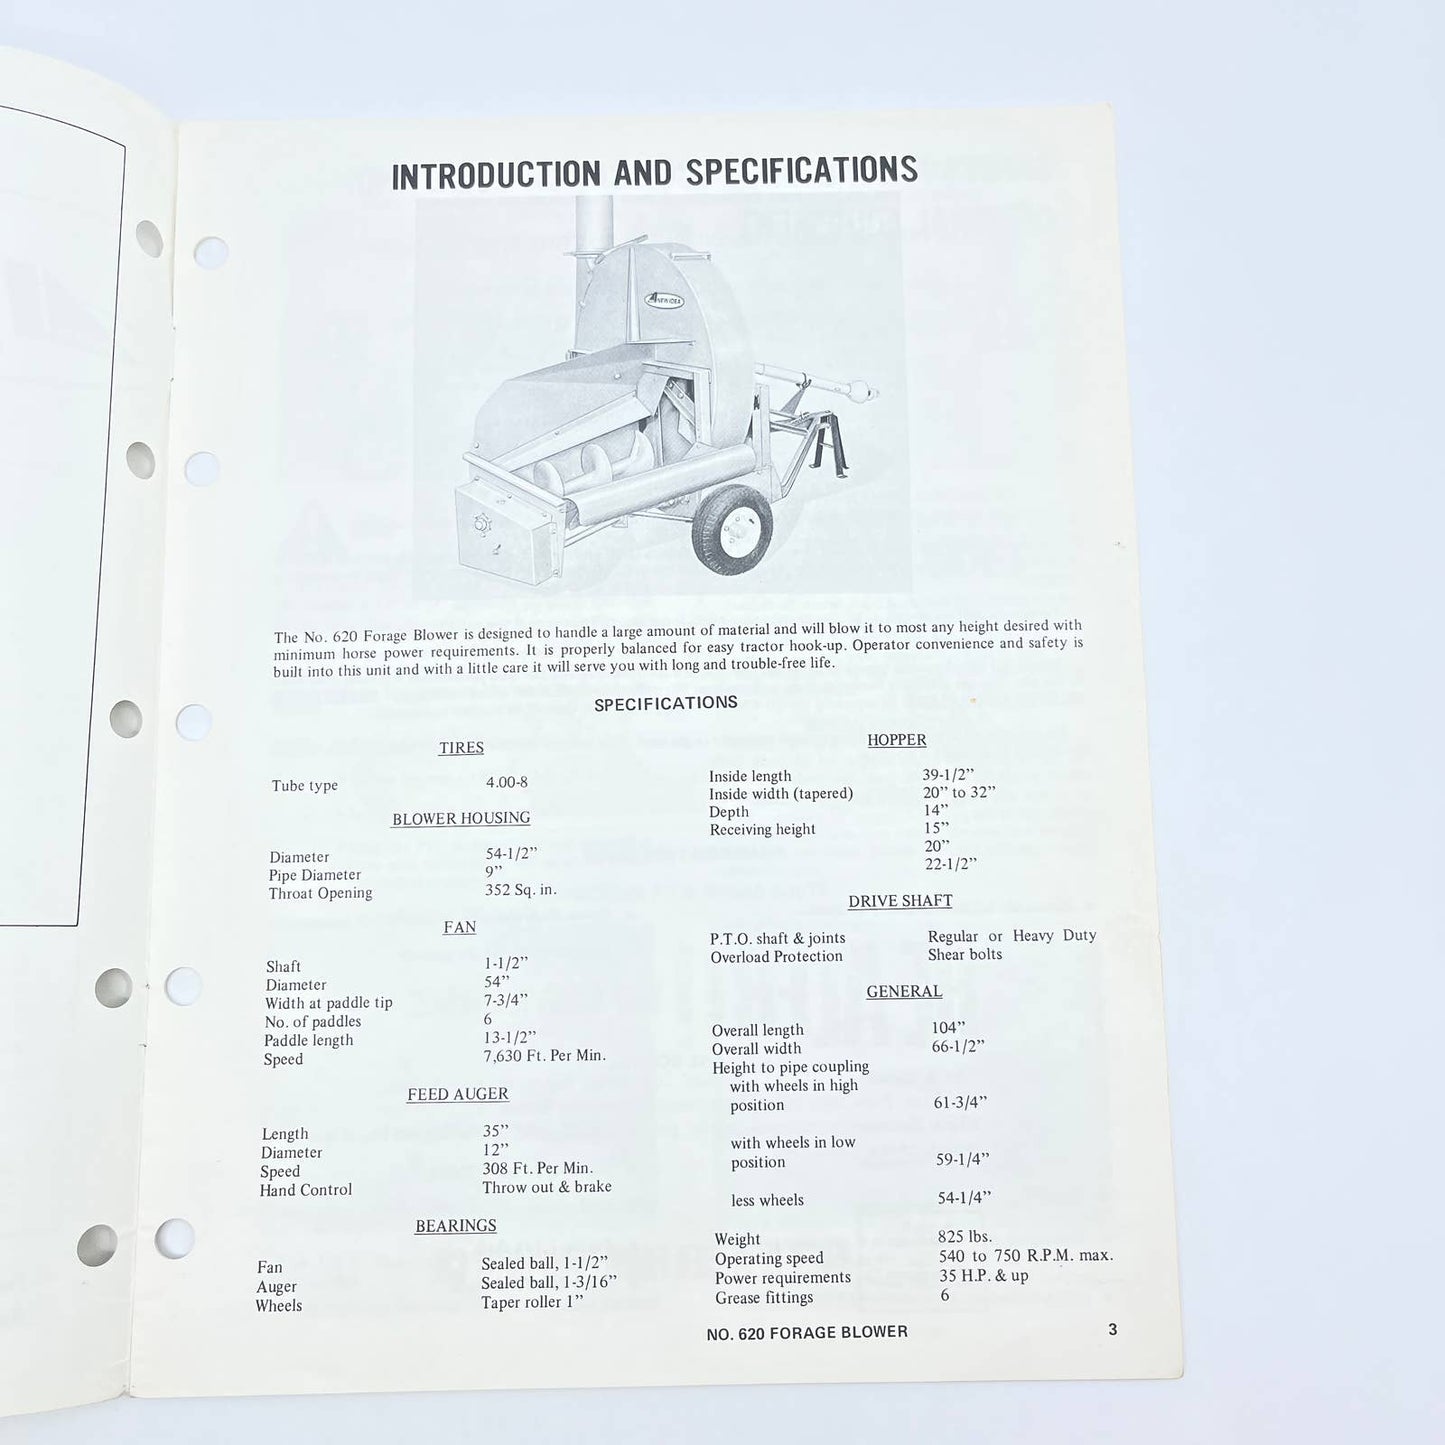 Original 1972 New Idea Operator's Manual 630 Forage Blower FB 102 TB9